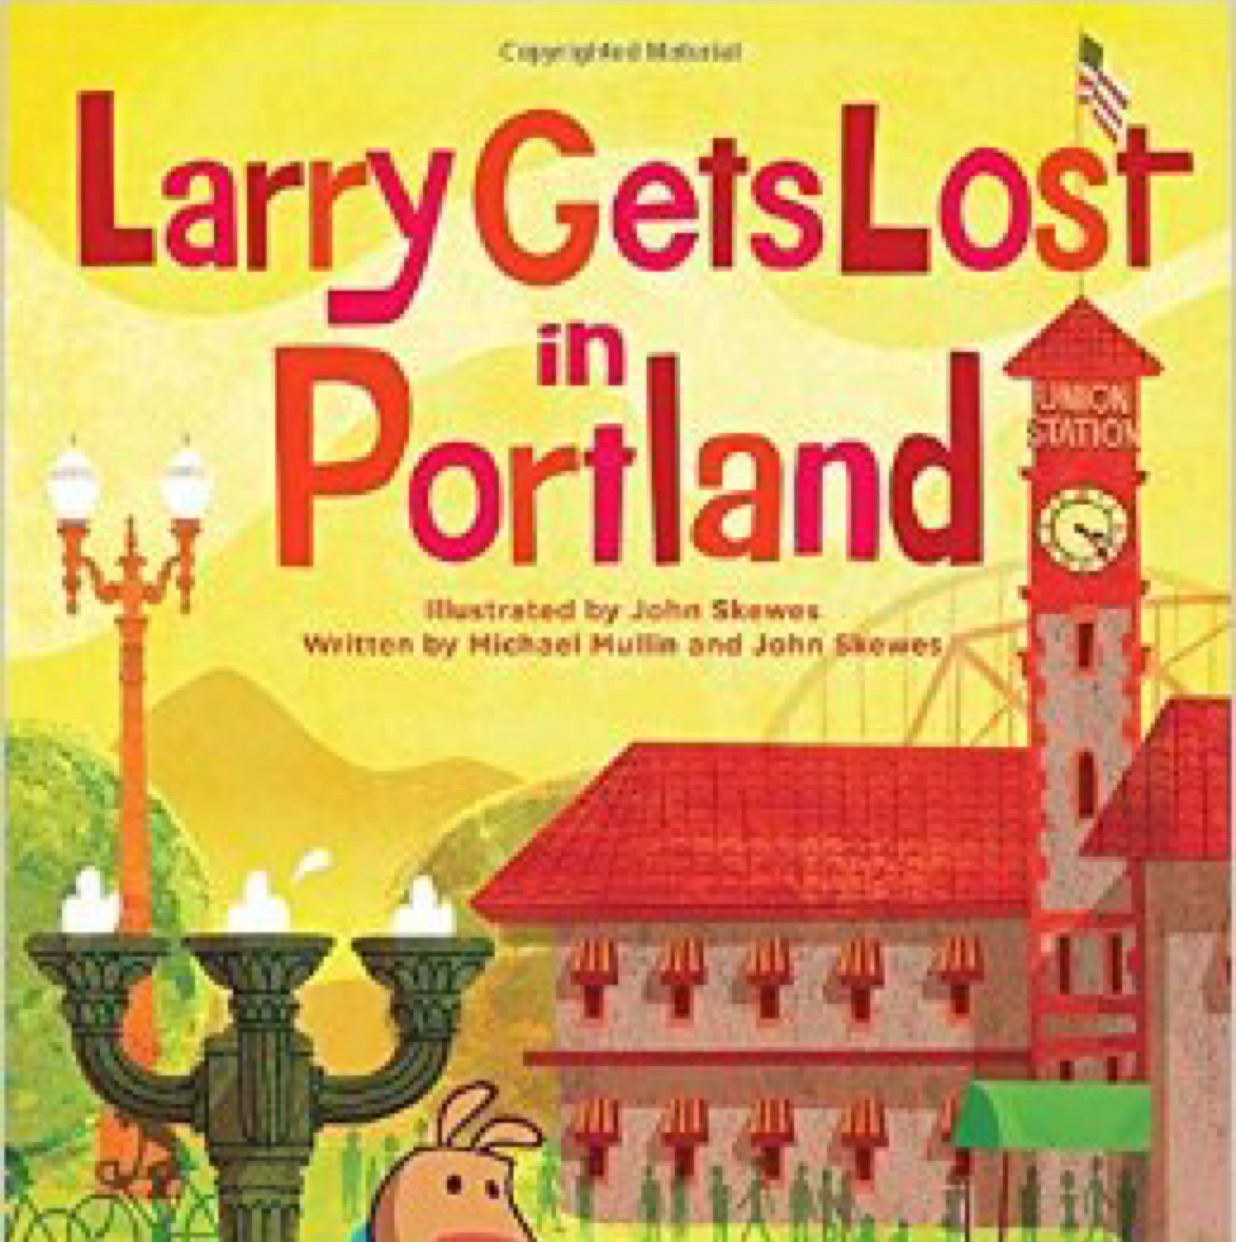 Nov 15, 2016 21:47 Larry Gets Lost in Portland